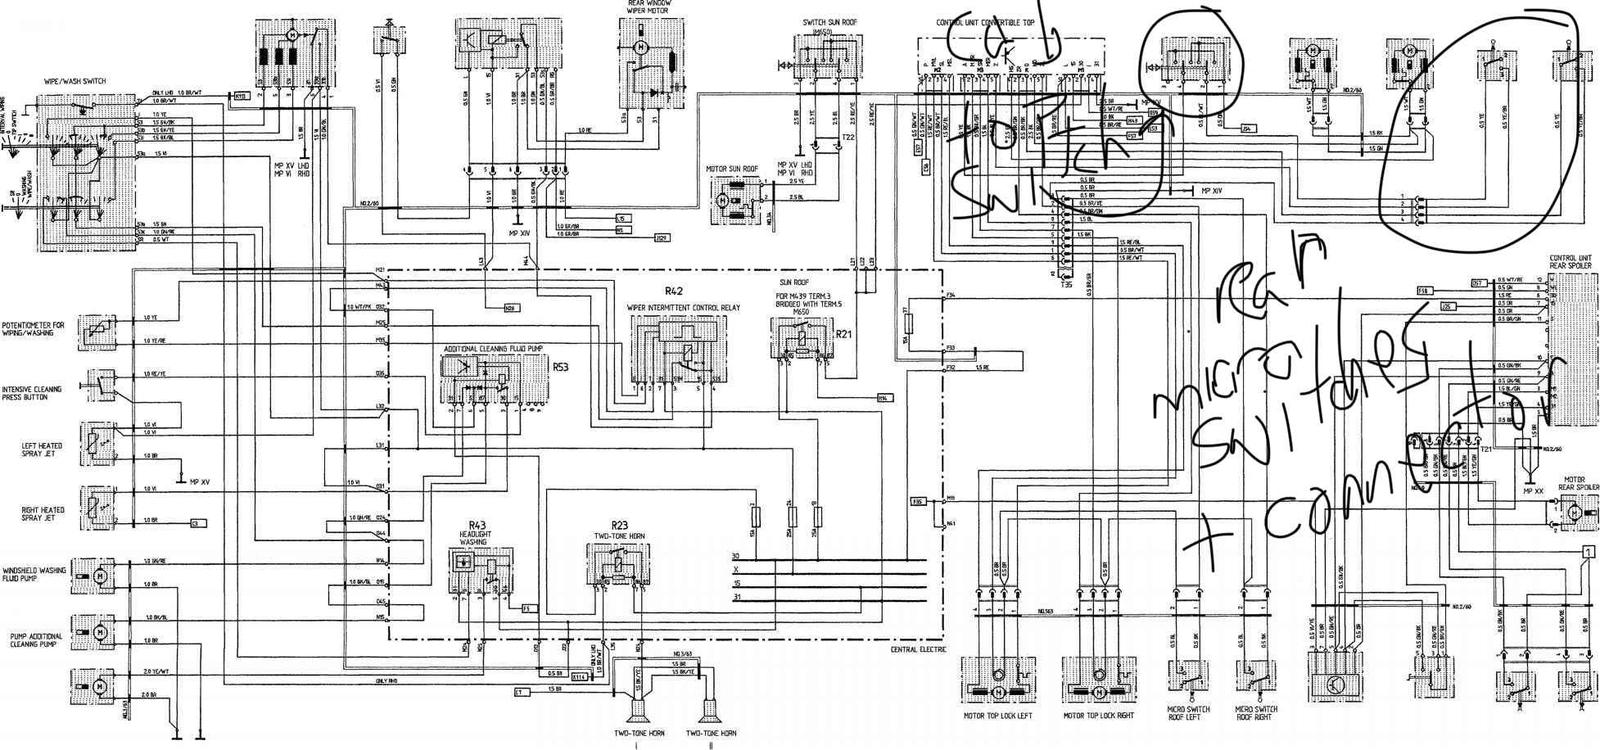 Alt-convertible top wiring, auto manual - Rennlist ... 2006 saab 9 3 wiring diagrams 